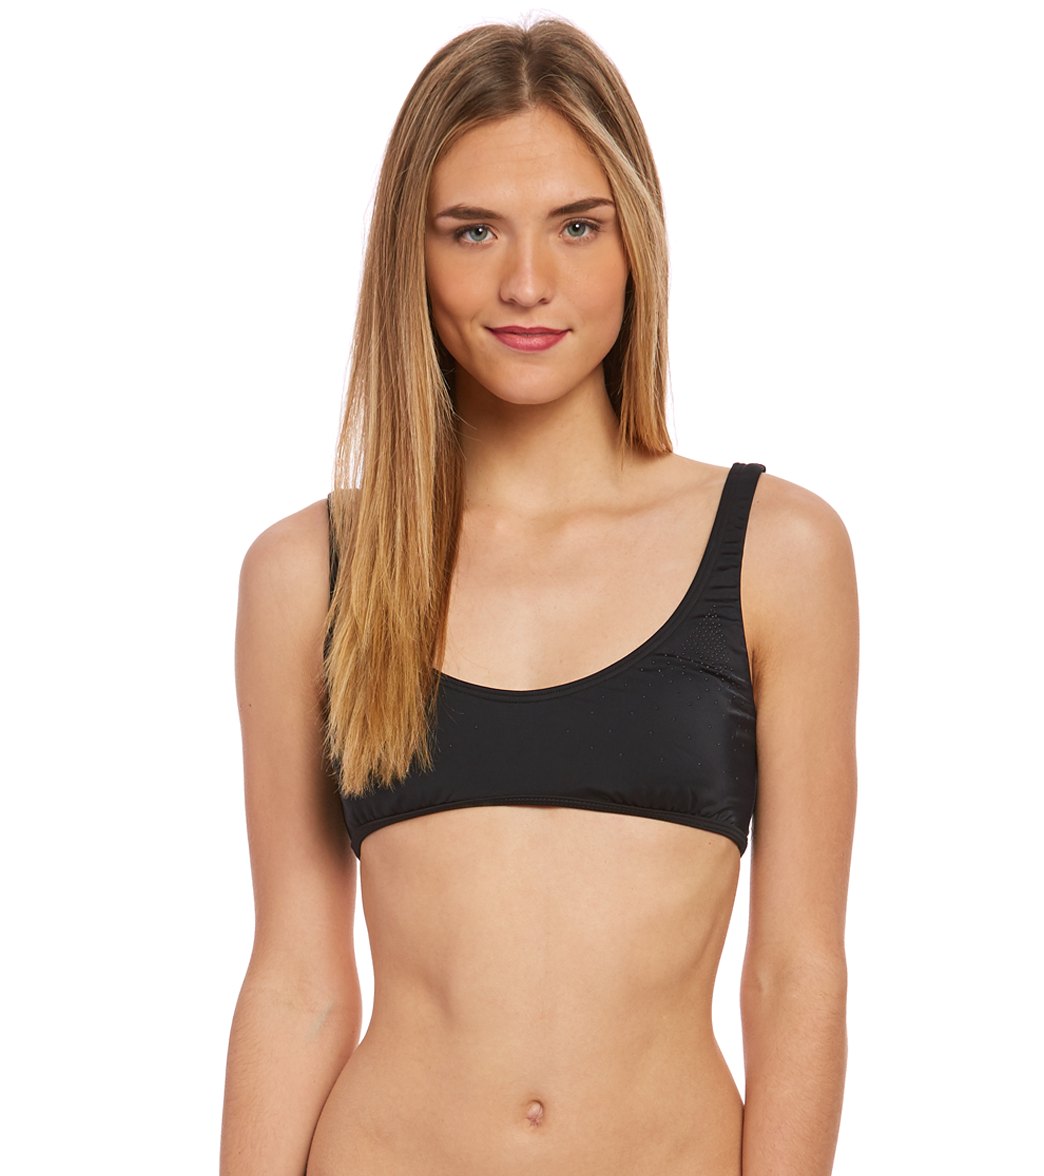 Reef Swimwear Californication Lace Up Halter Bikini Top - Black Large - Swimoutlet.com